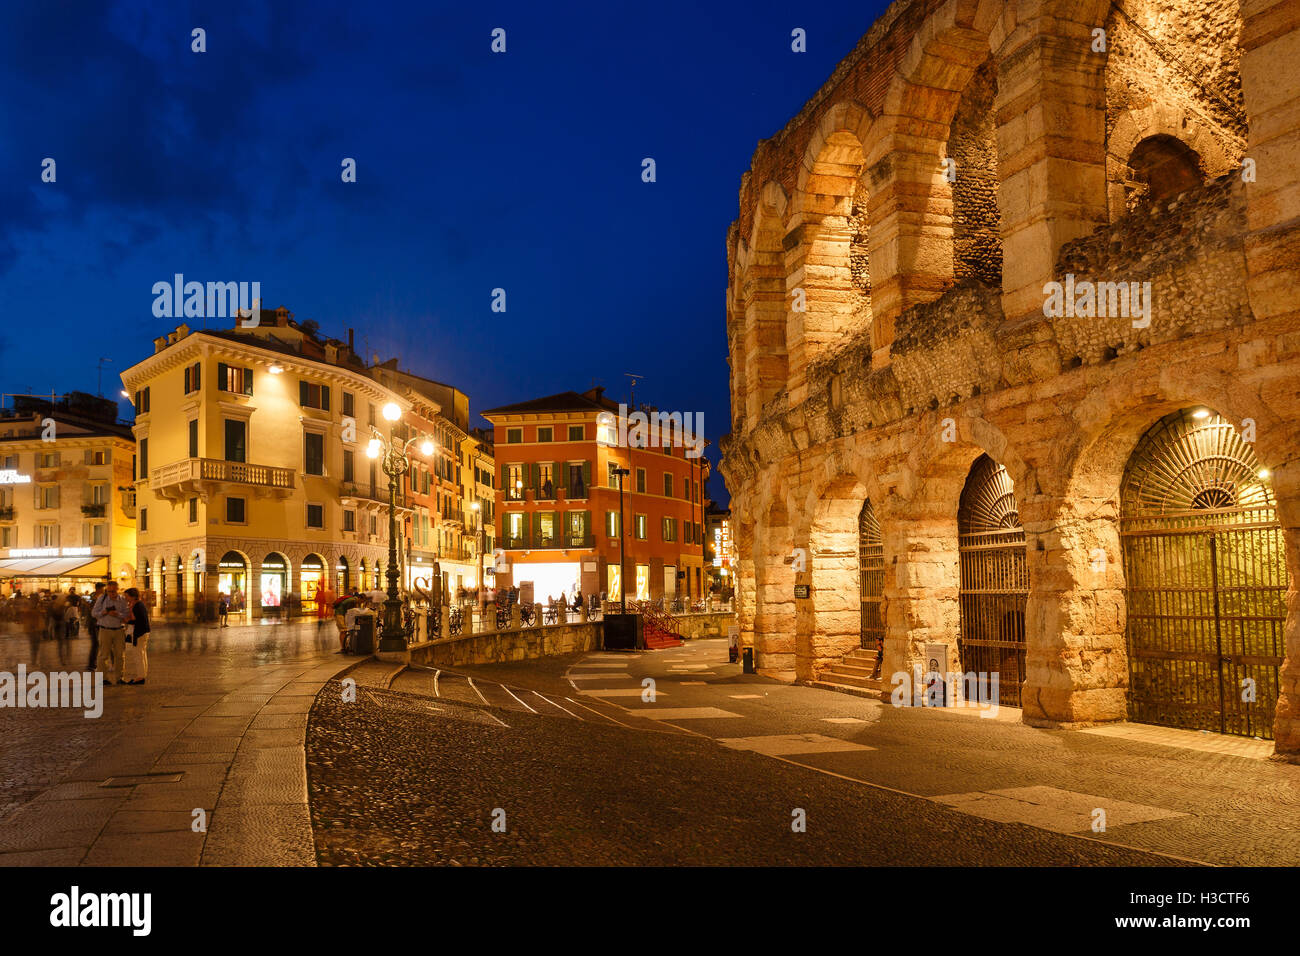 The Bra square nearby the Verona Arena in Verona city, Italy Stock Photo